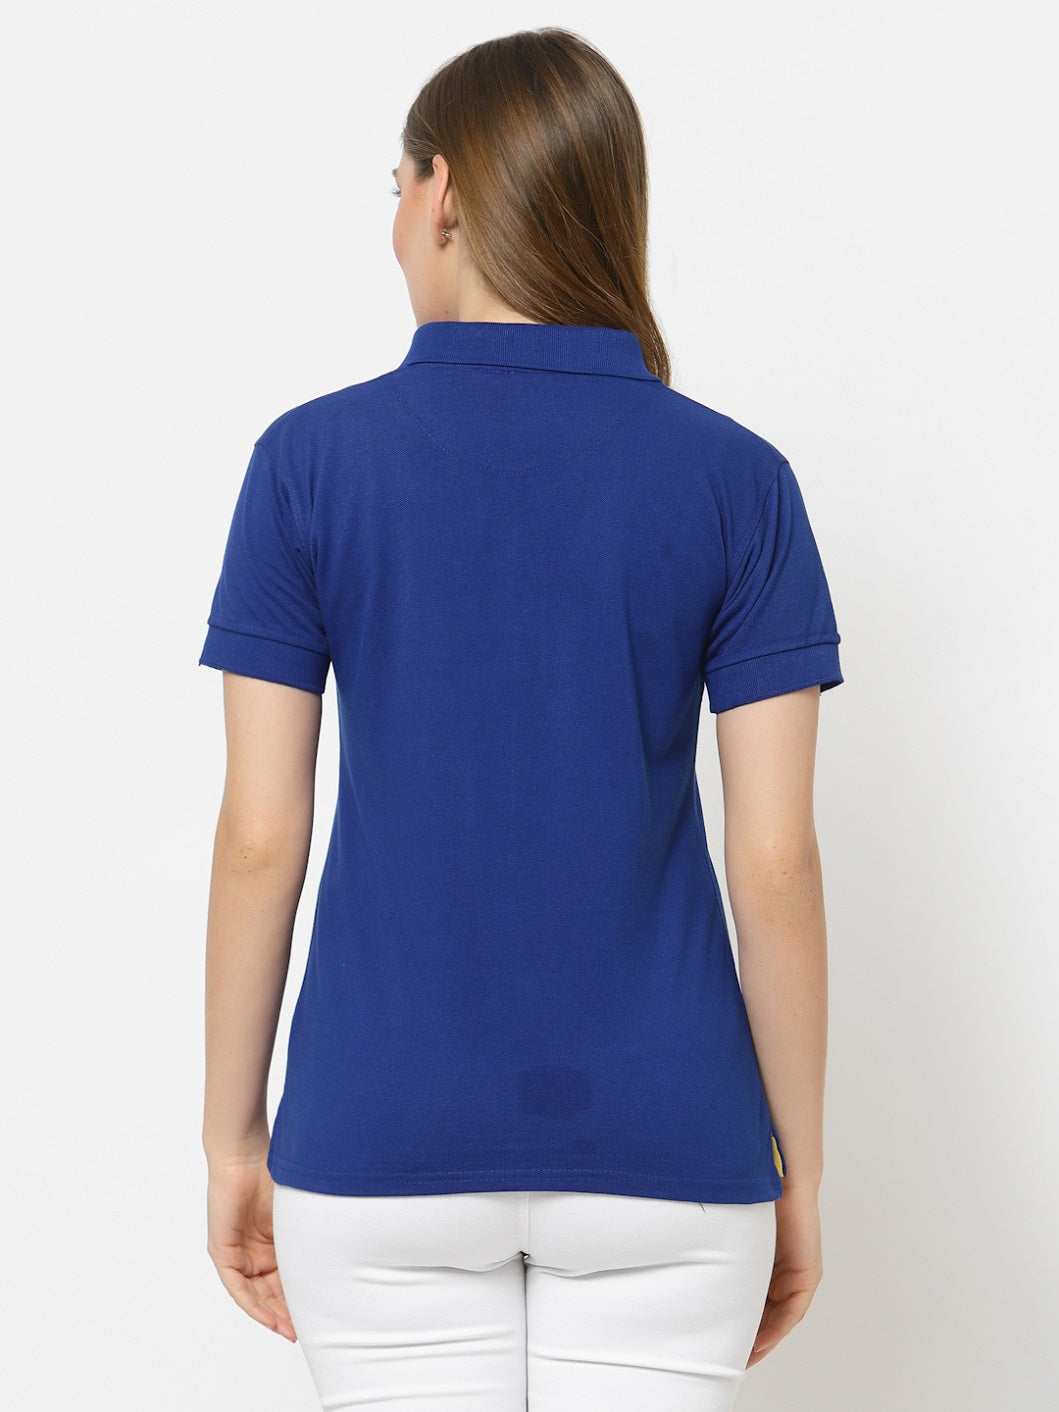 UZARUS Women's Cotton Polo Collar Neck T-Shirt Top